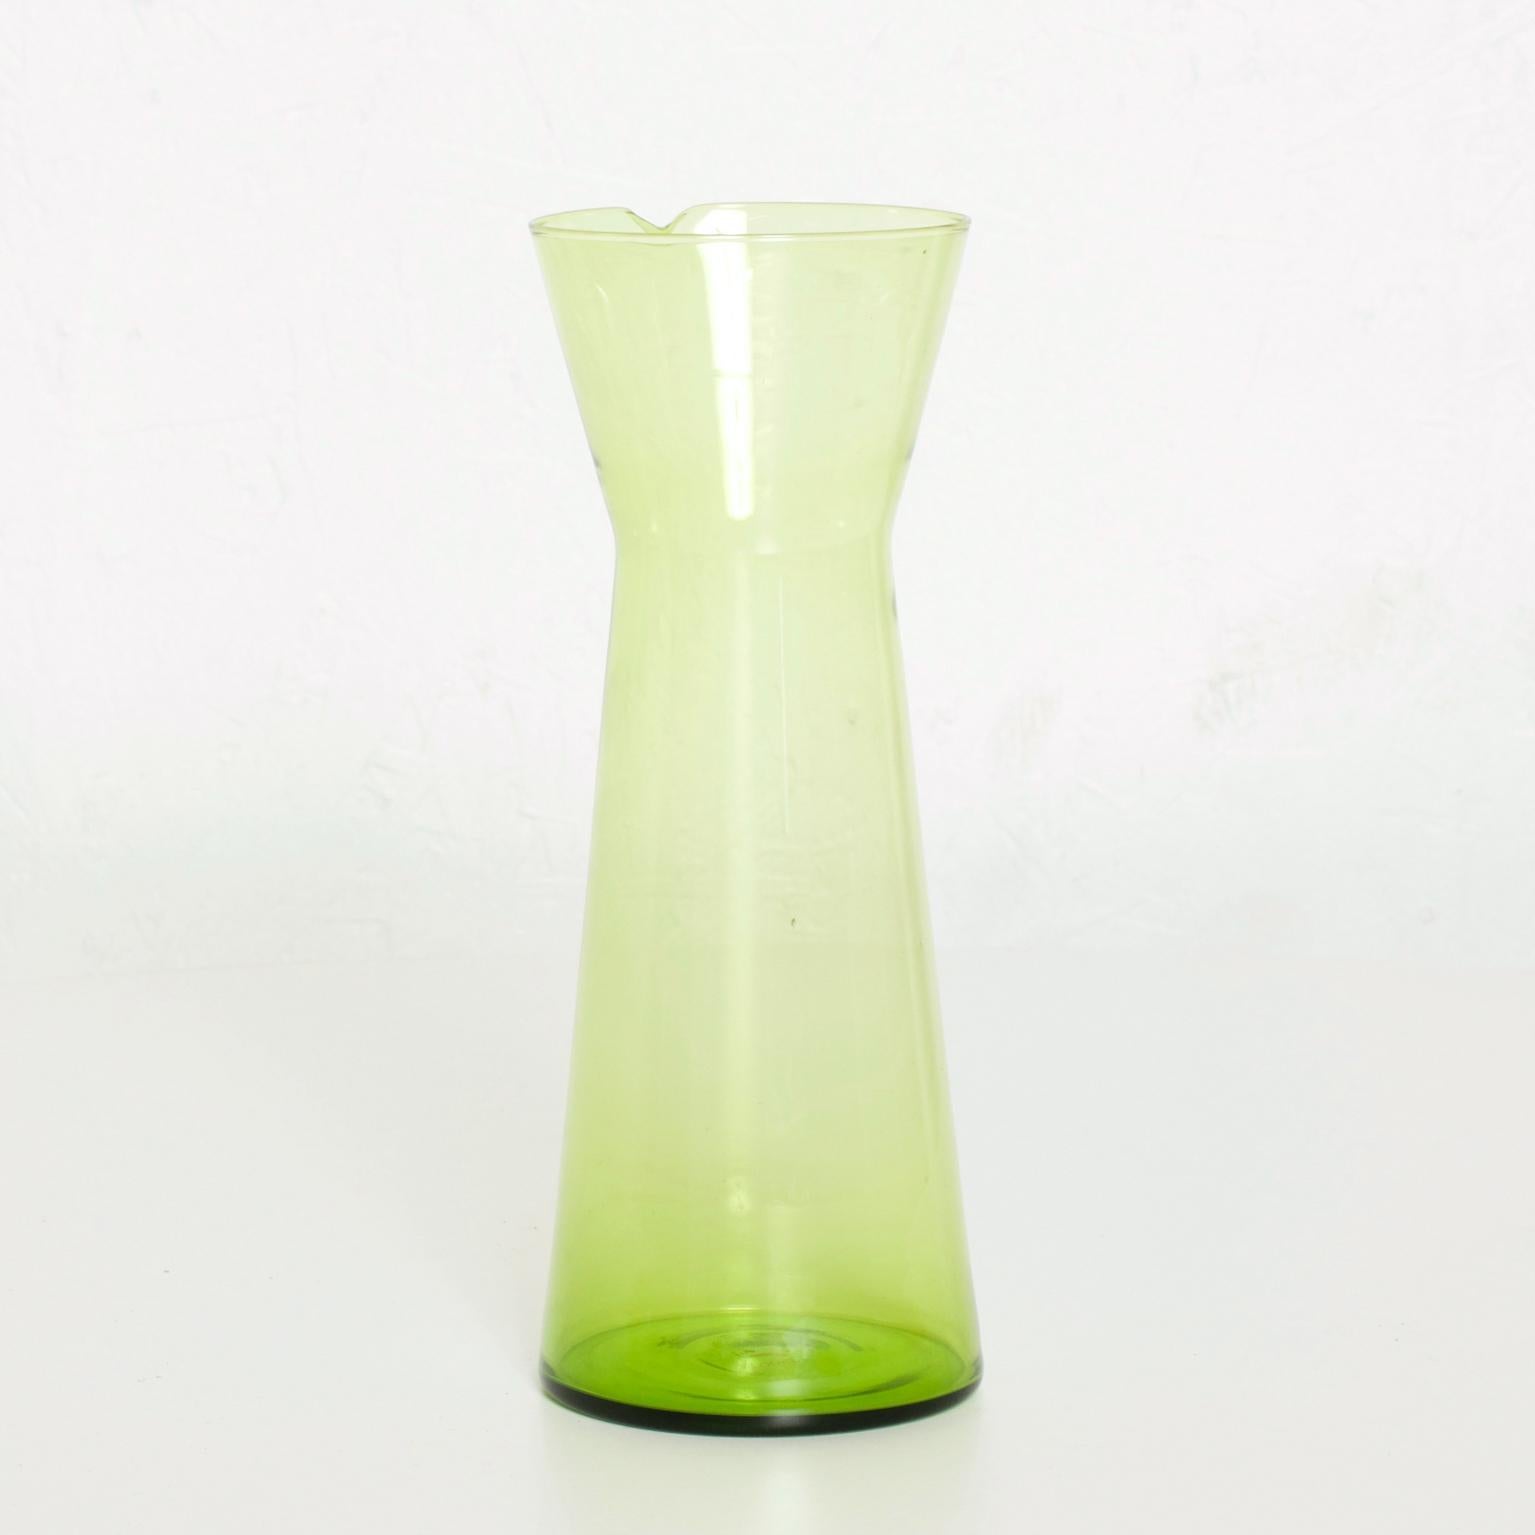 Late 20th Century Mid-Century Modern Finland Green Glass Pitcher Vase Designed by Kaj Franck